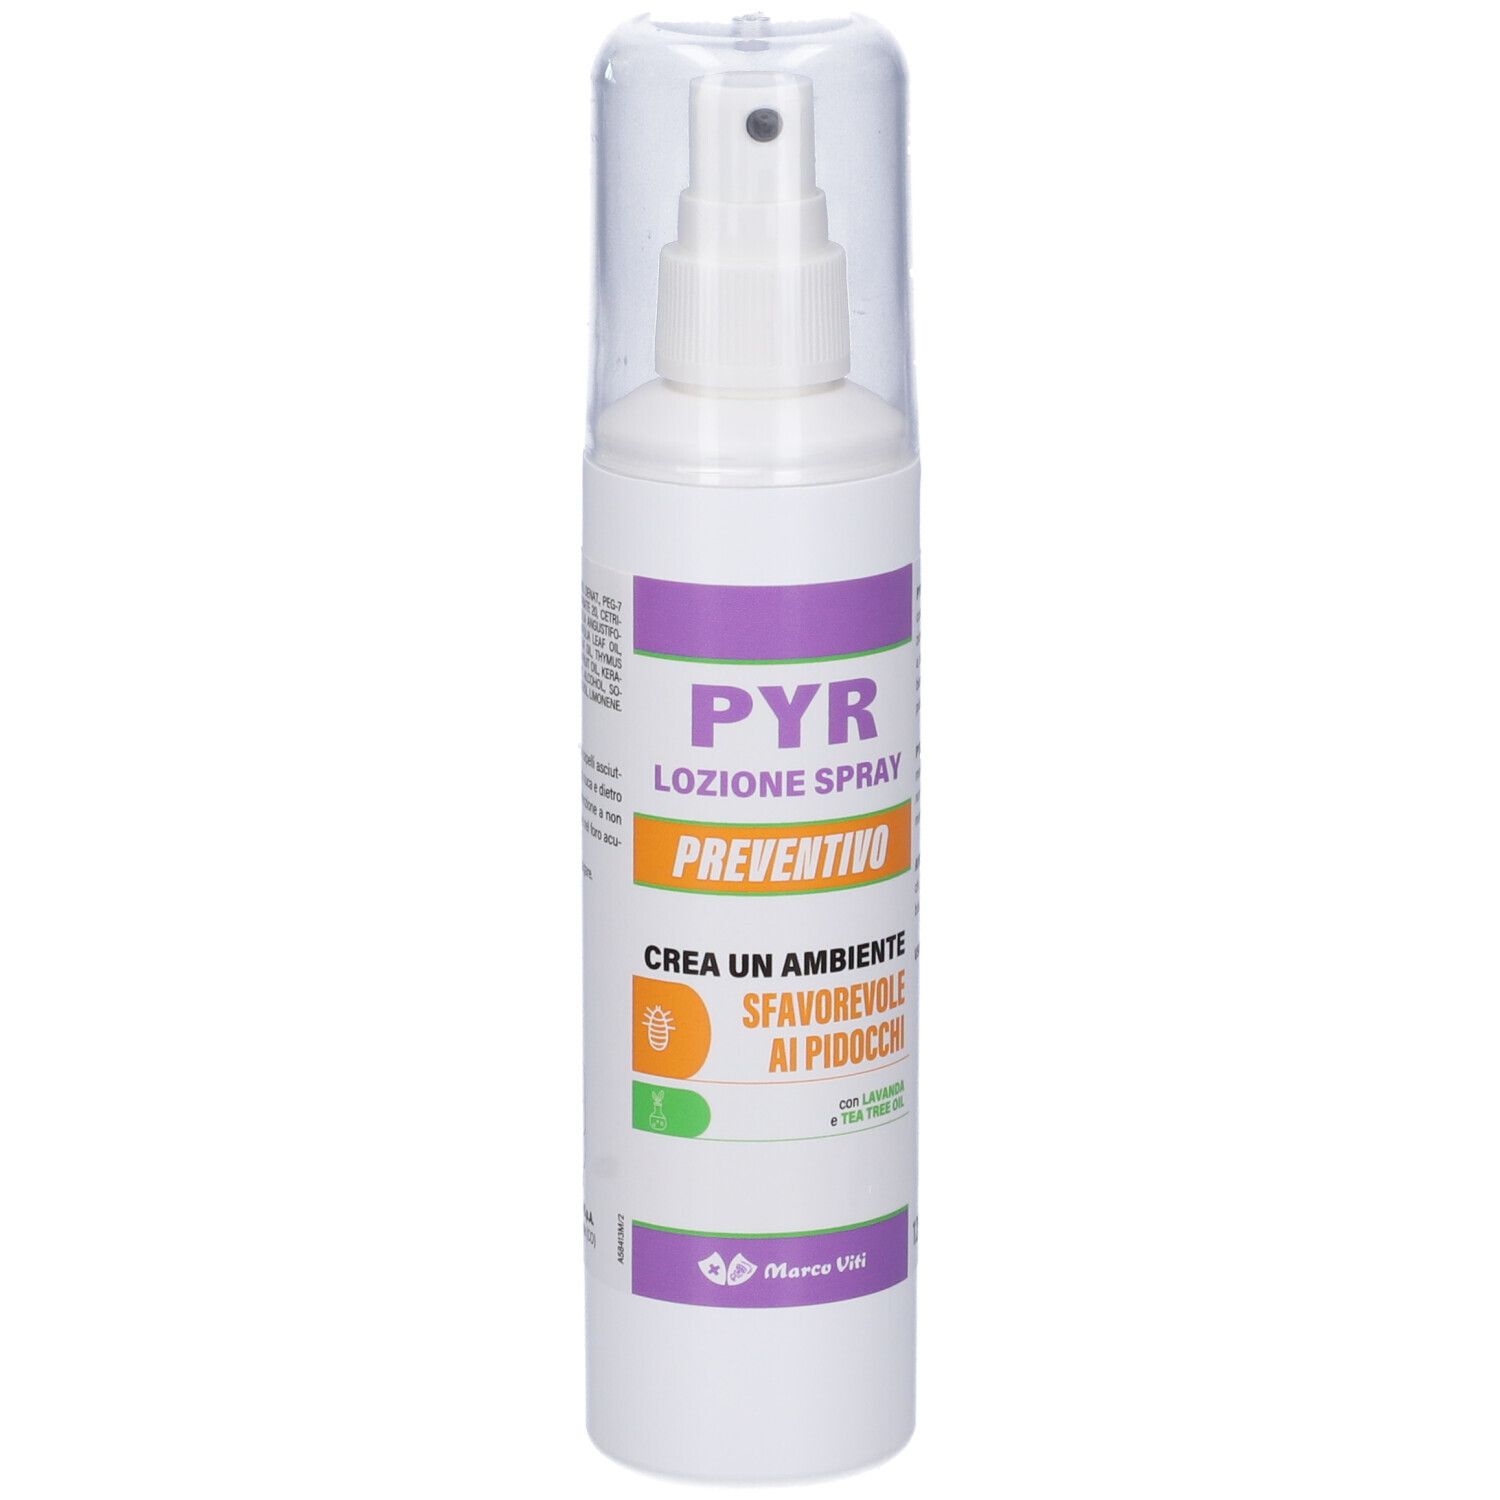 PYR Preventivo Lozione Spray